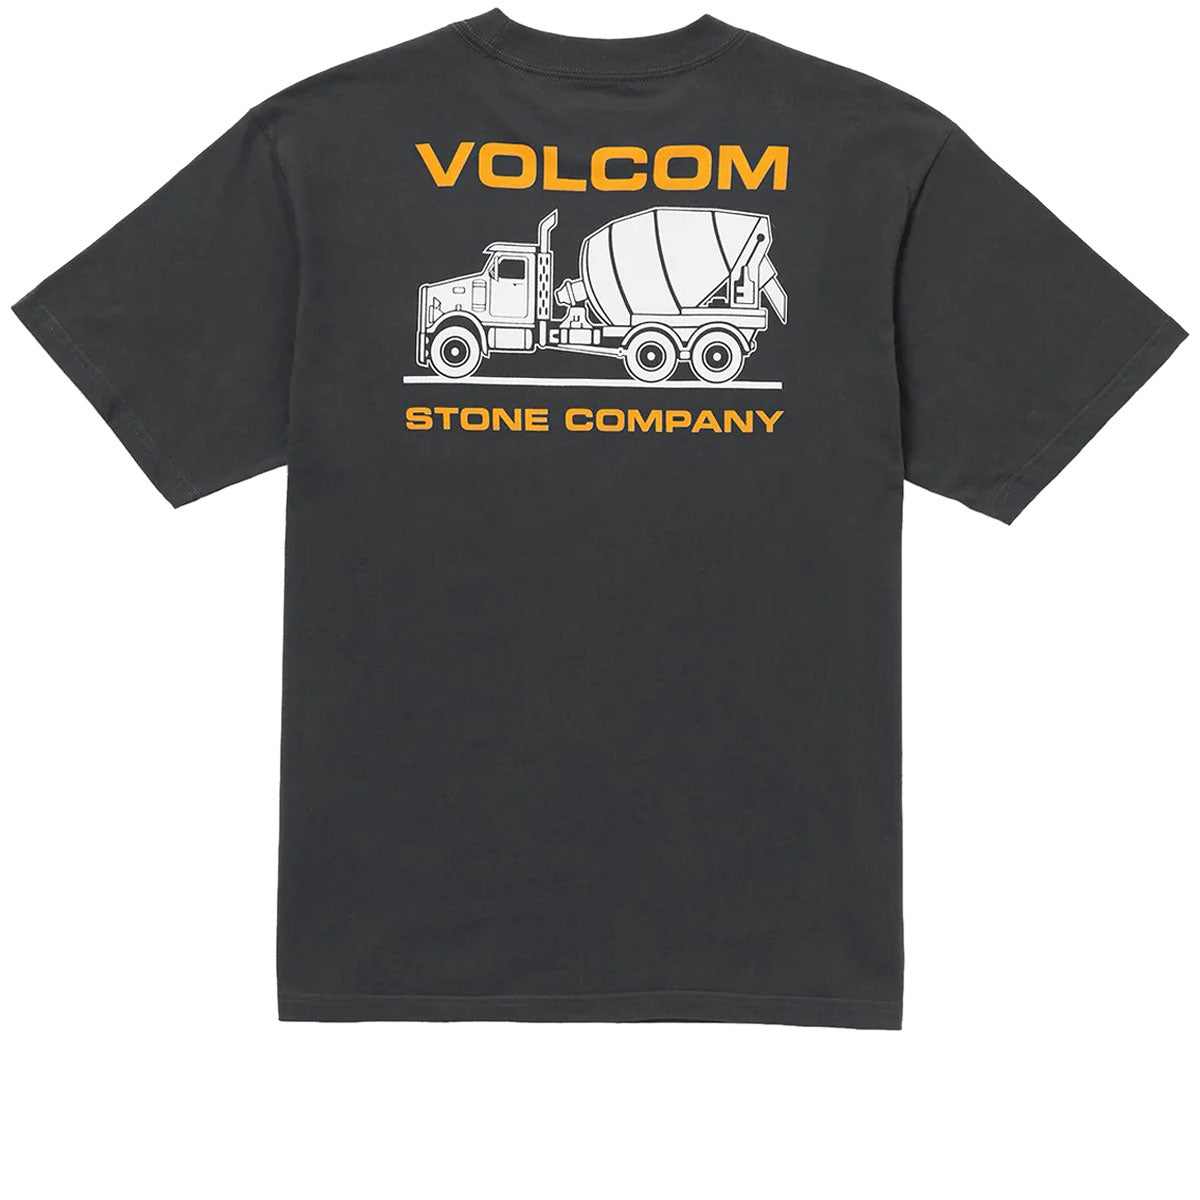 Volcom Skate Vitals Grant Taylor 1 T-Shirt - Stealth image 2